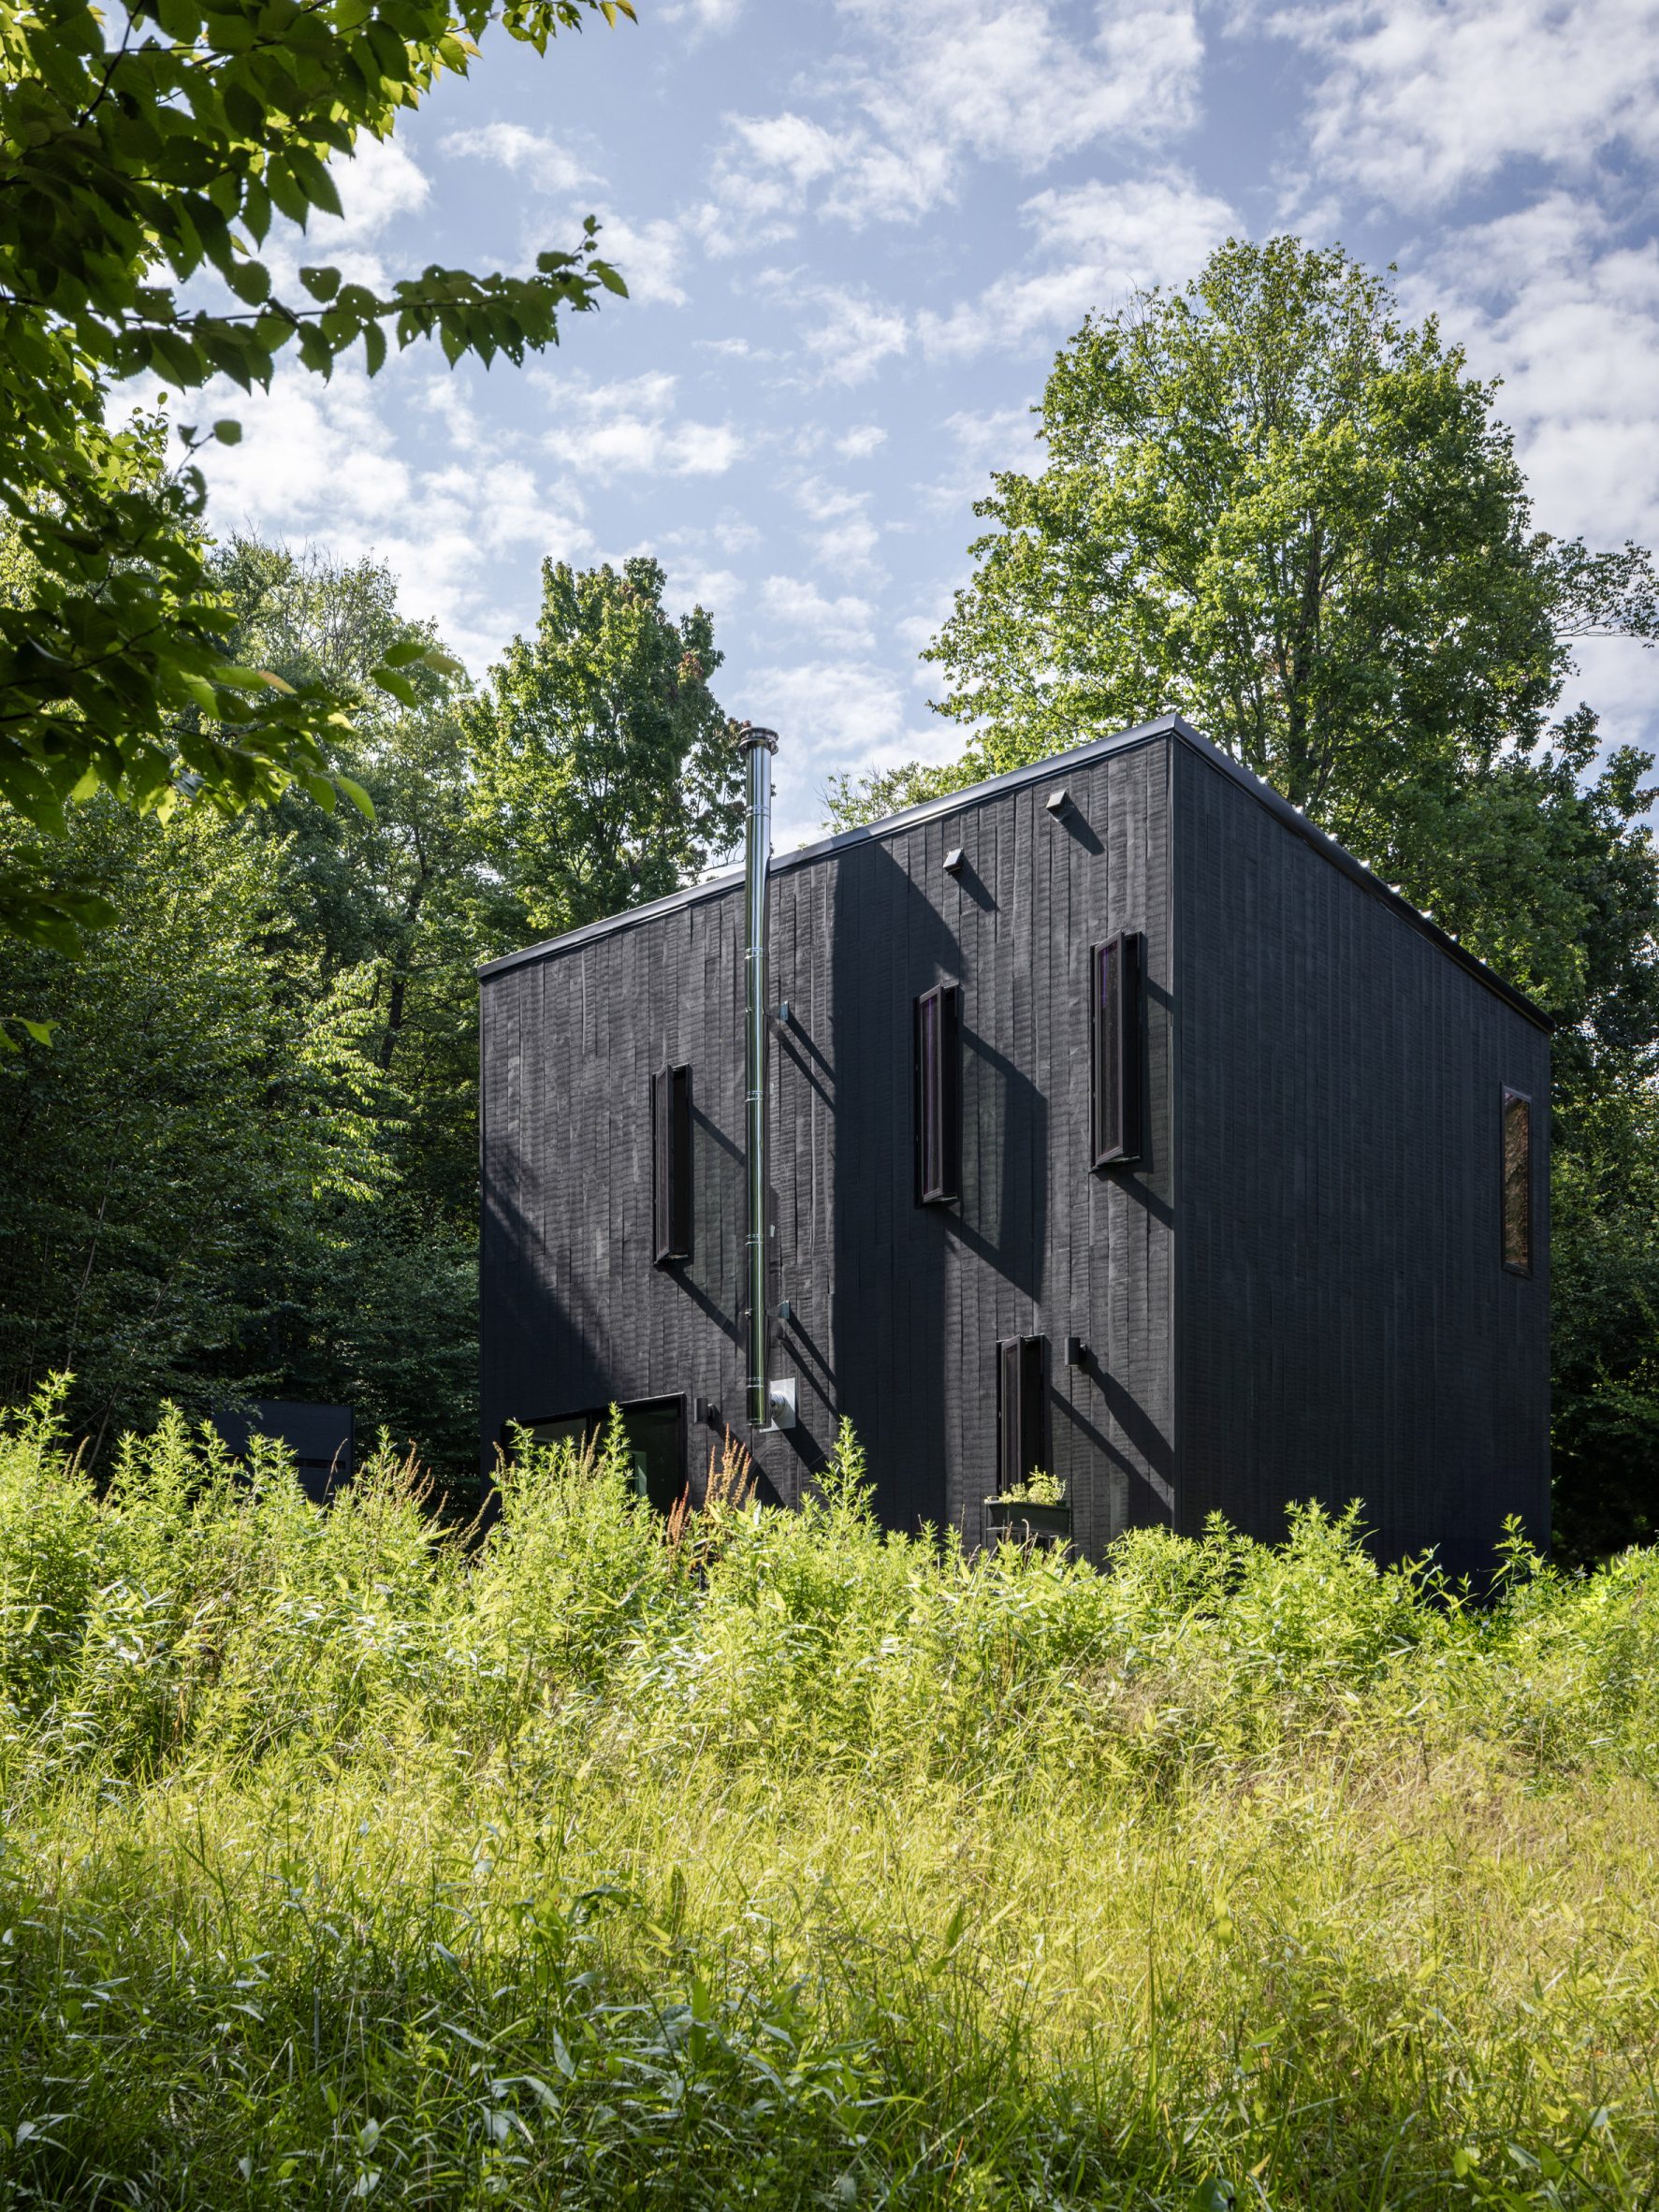 Black clad cabin in the Catskills